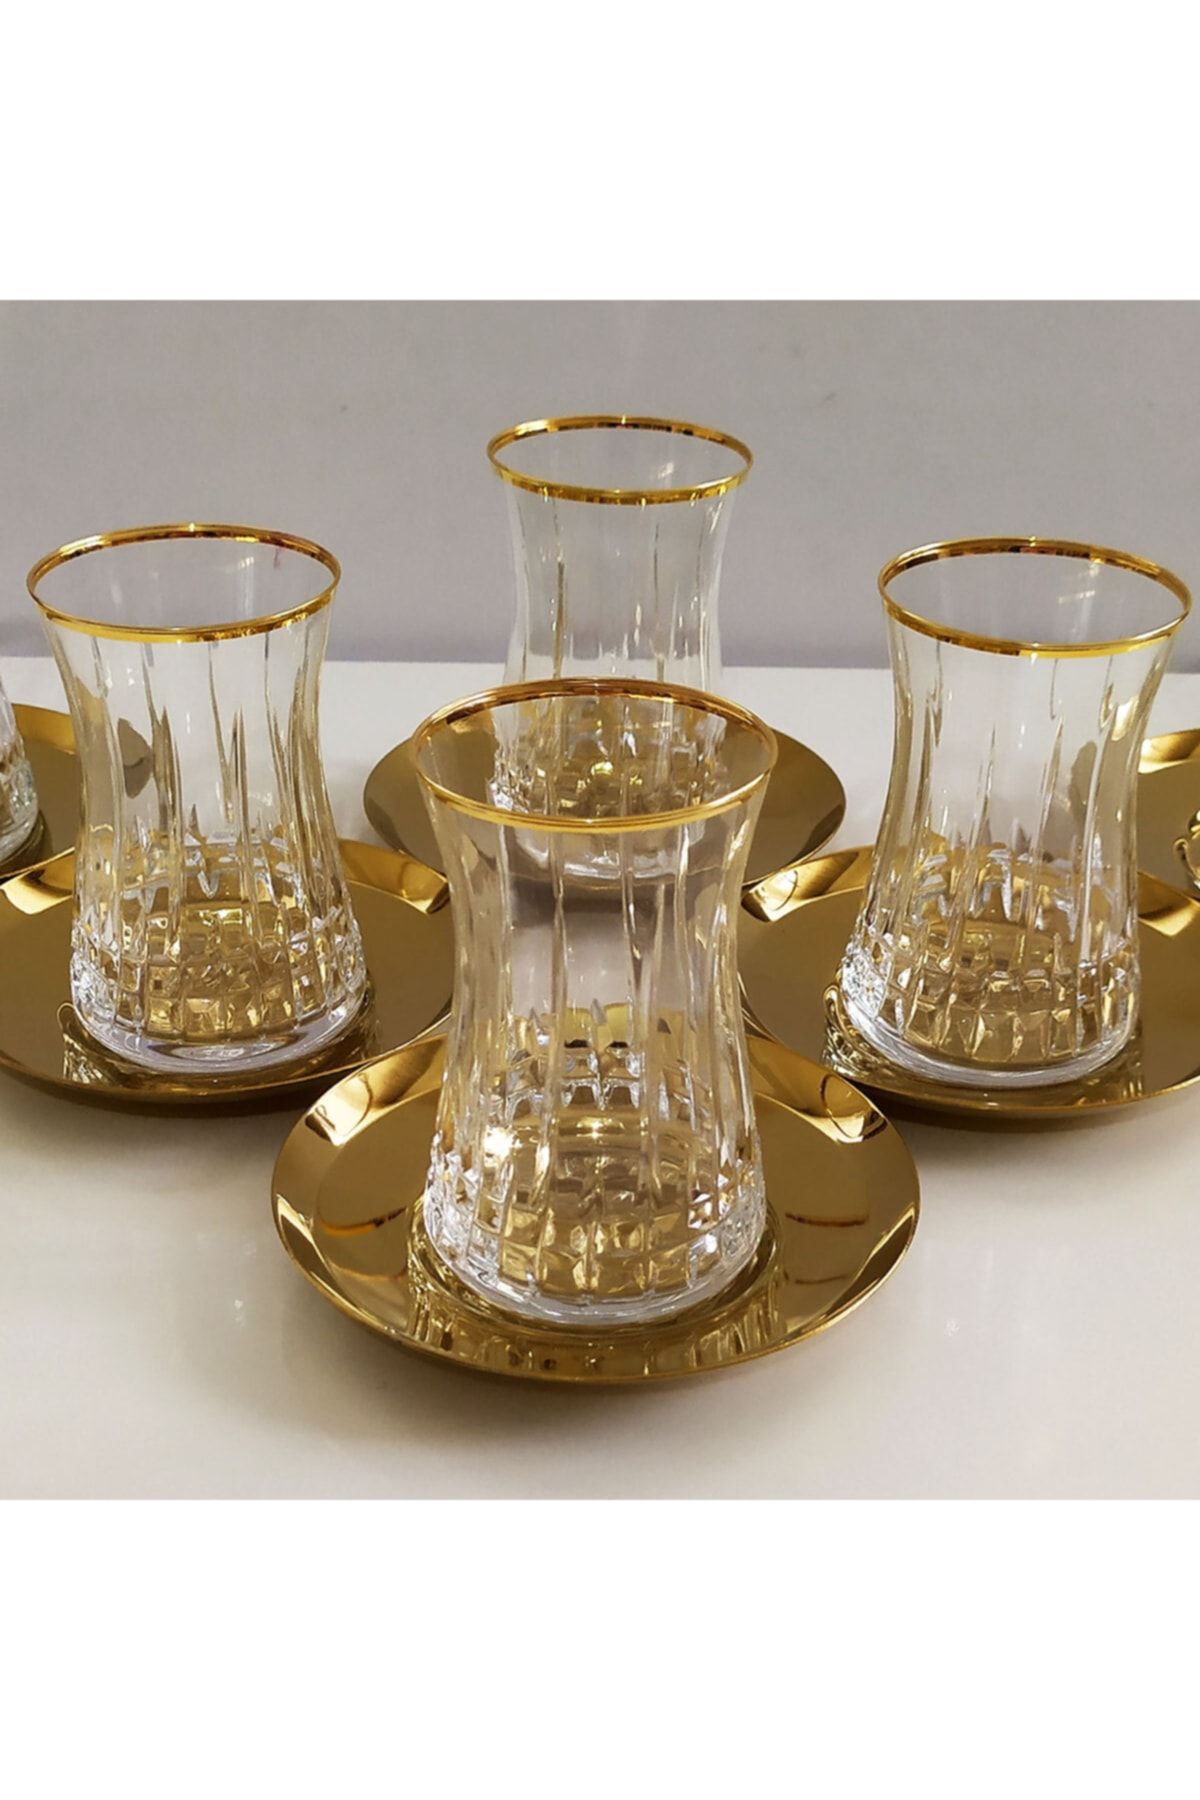 Paşabahçe ست بشقاب طلا شیشه ای چای لیسبون 42361 - برای 6 نفر